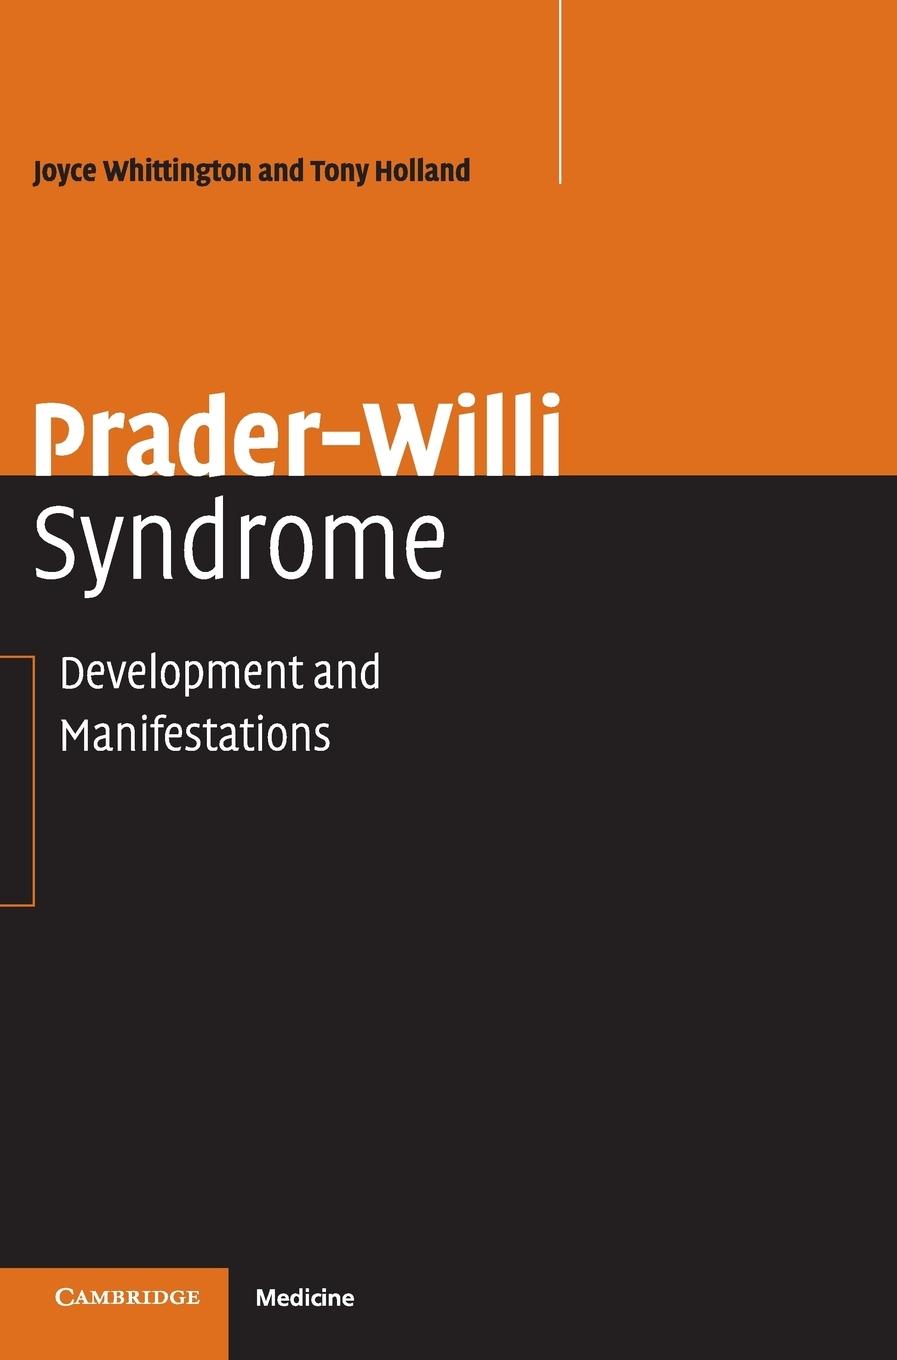 Prader-Willi Syndrome - Whittington, Joyce Holland, Tony